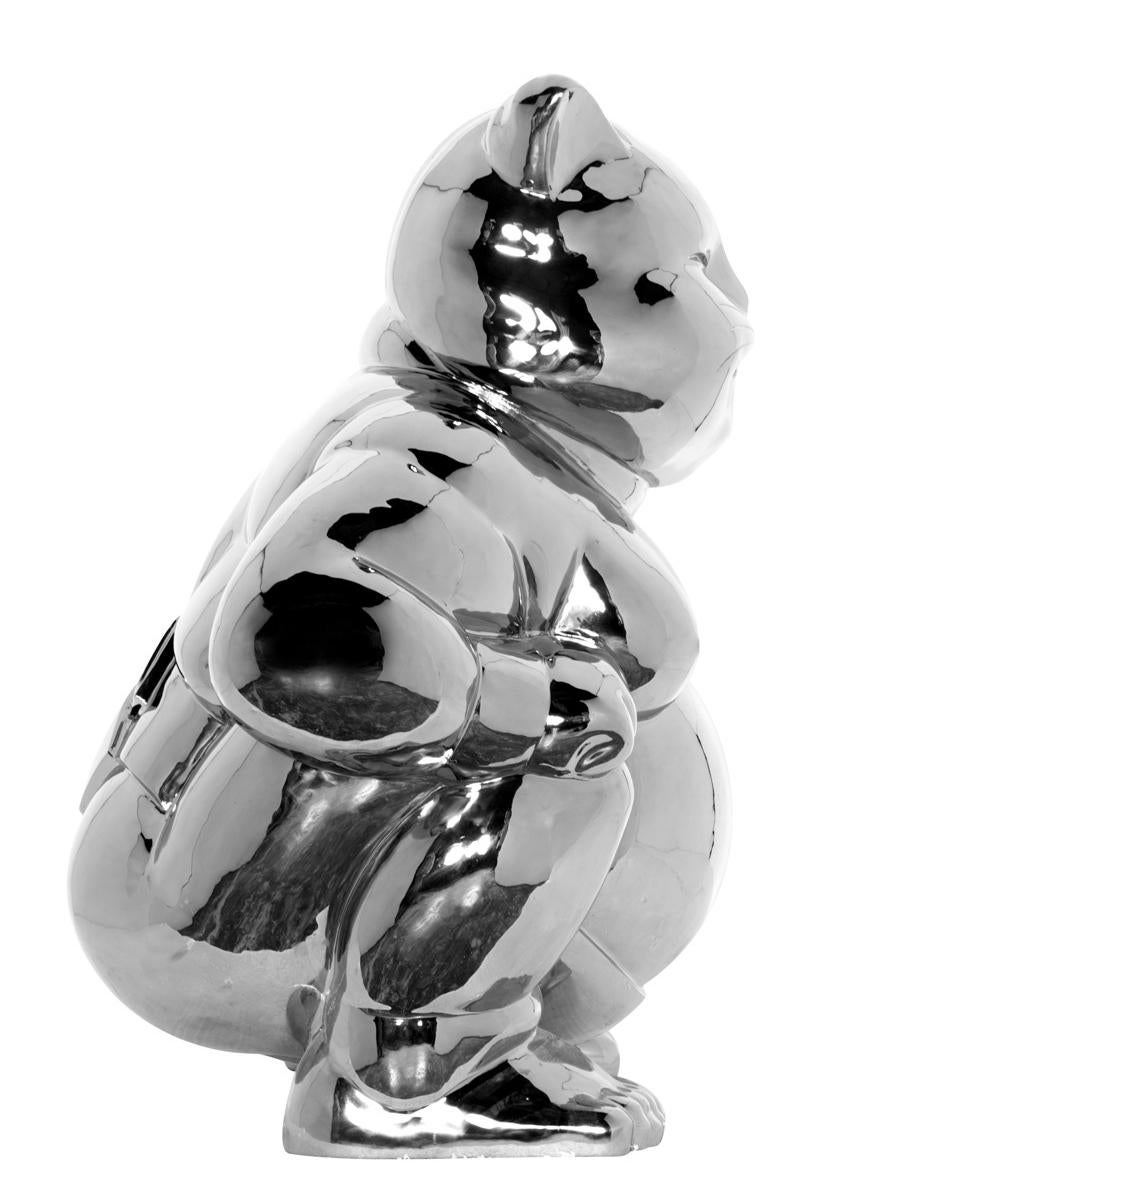 Steel Sumocat : Metallic Majesty - Contemporary Sculpture by HIRO ANDO